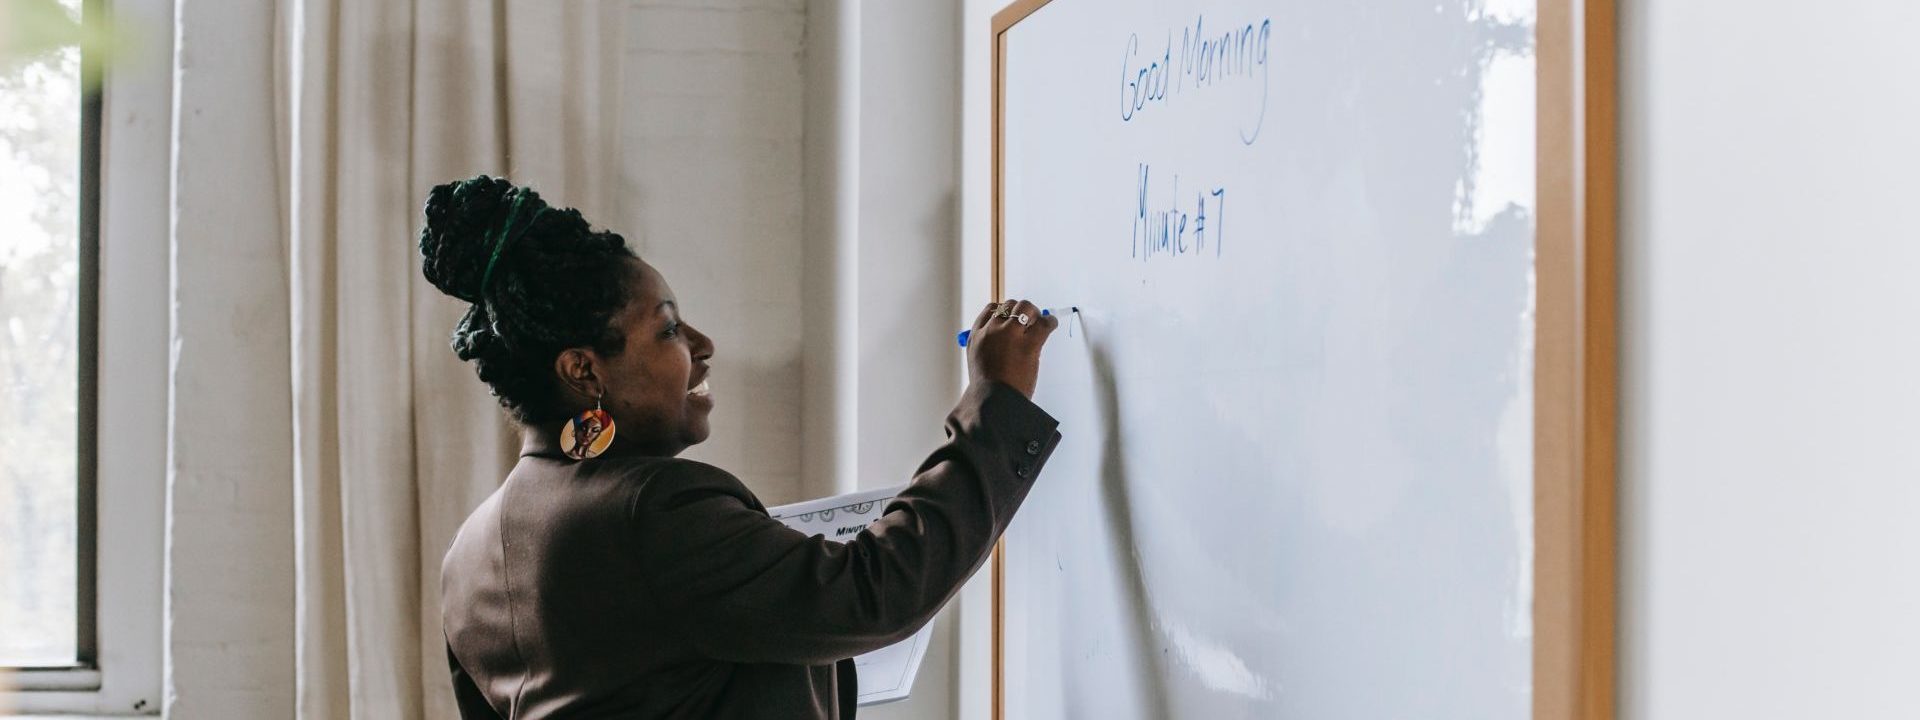 A teacher writing on a white board in class.